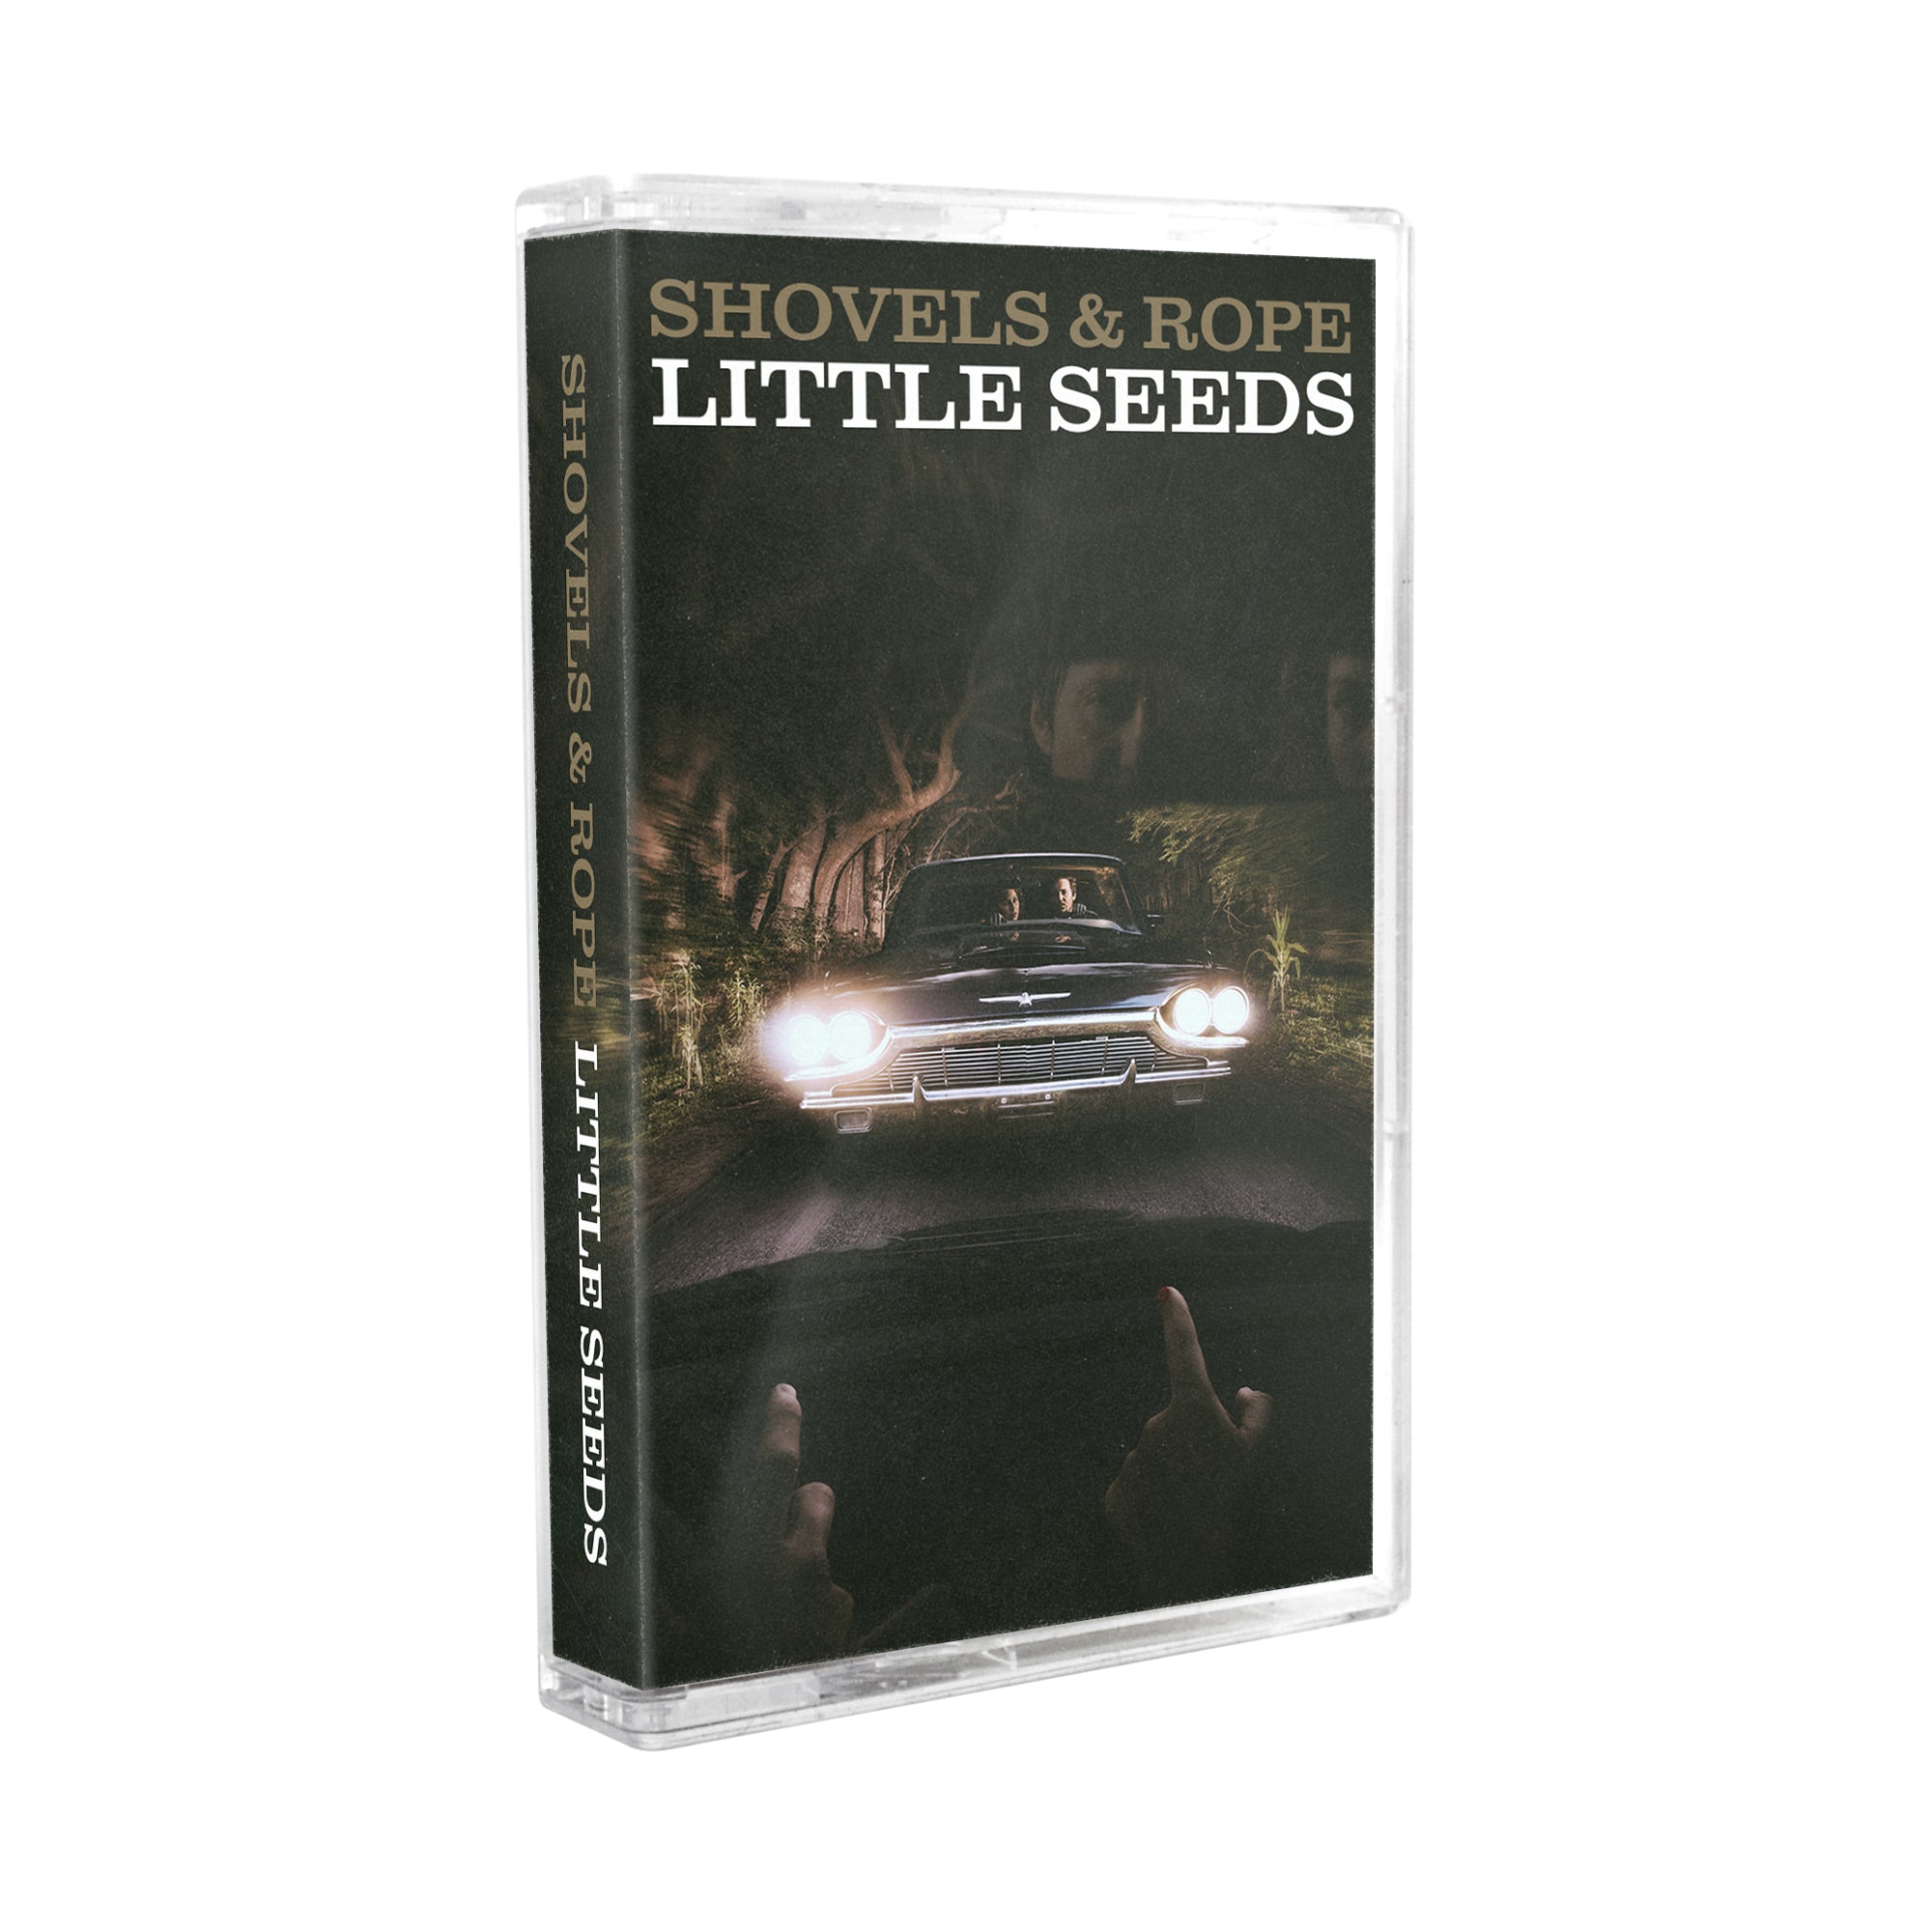 Shovels & Rope - Little Seeds [Cassette]